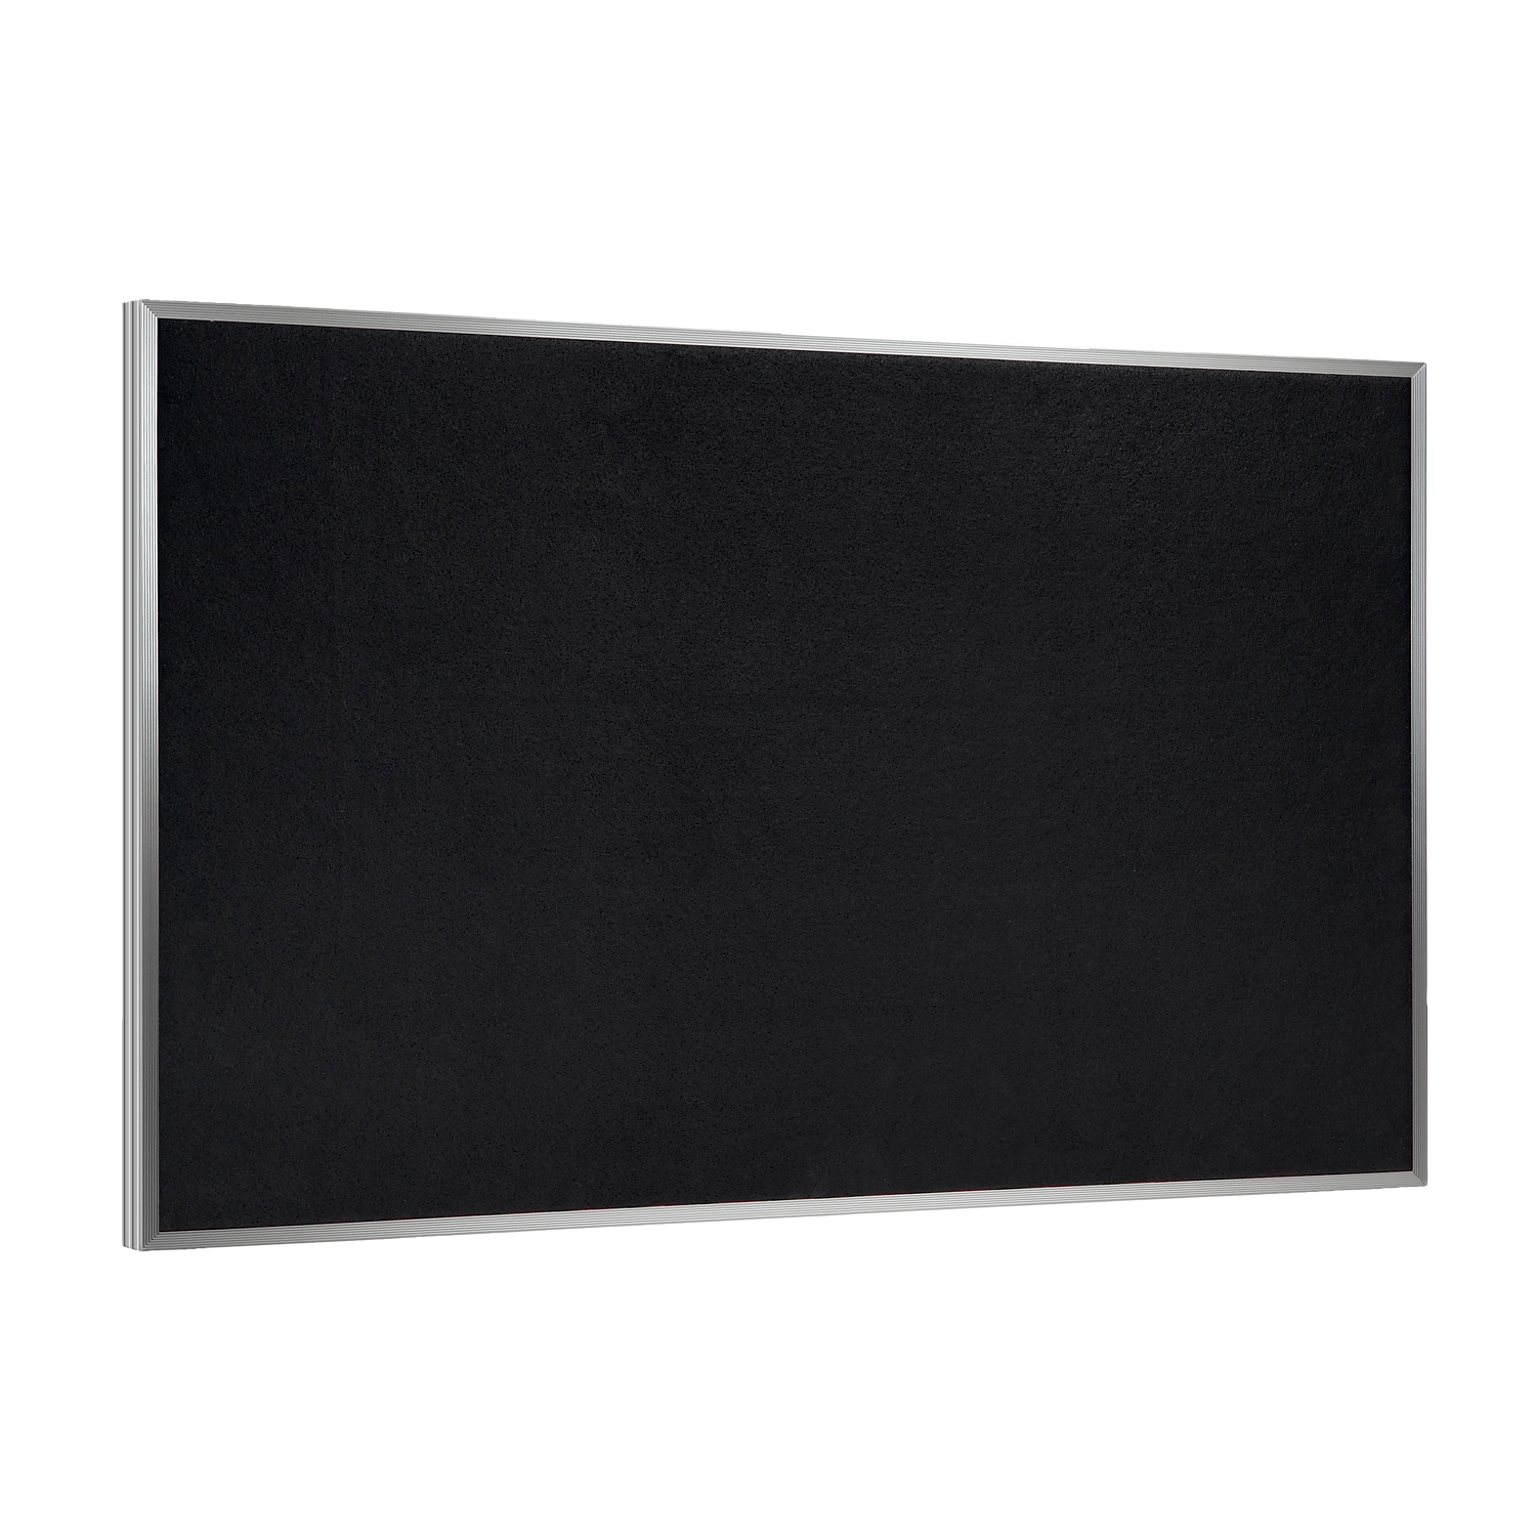 Ghent 4 H x 5 W Recycled Bulletin Board with Aluminum Frame, Black (ATR45-BK)